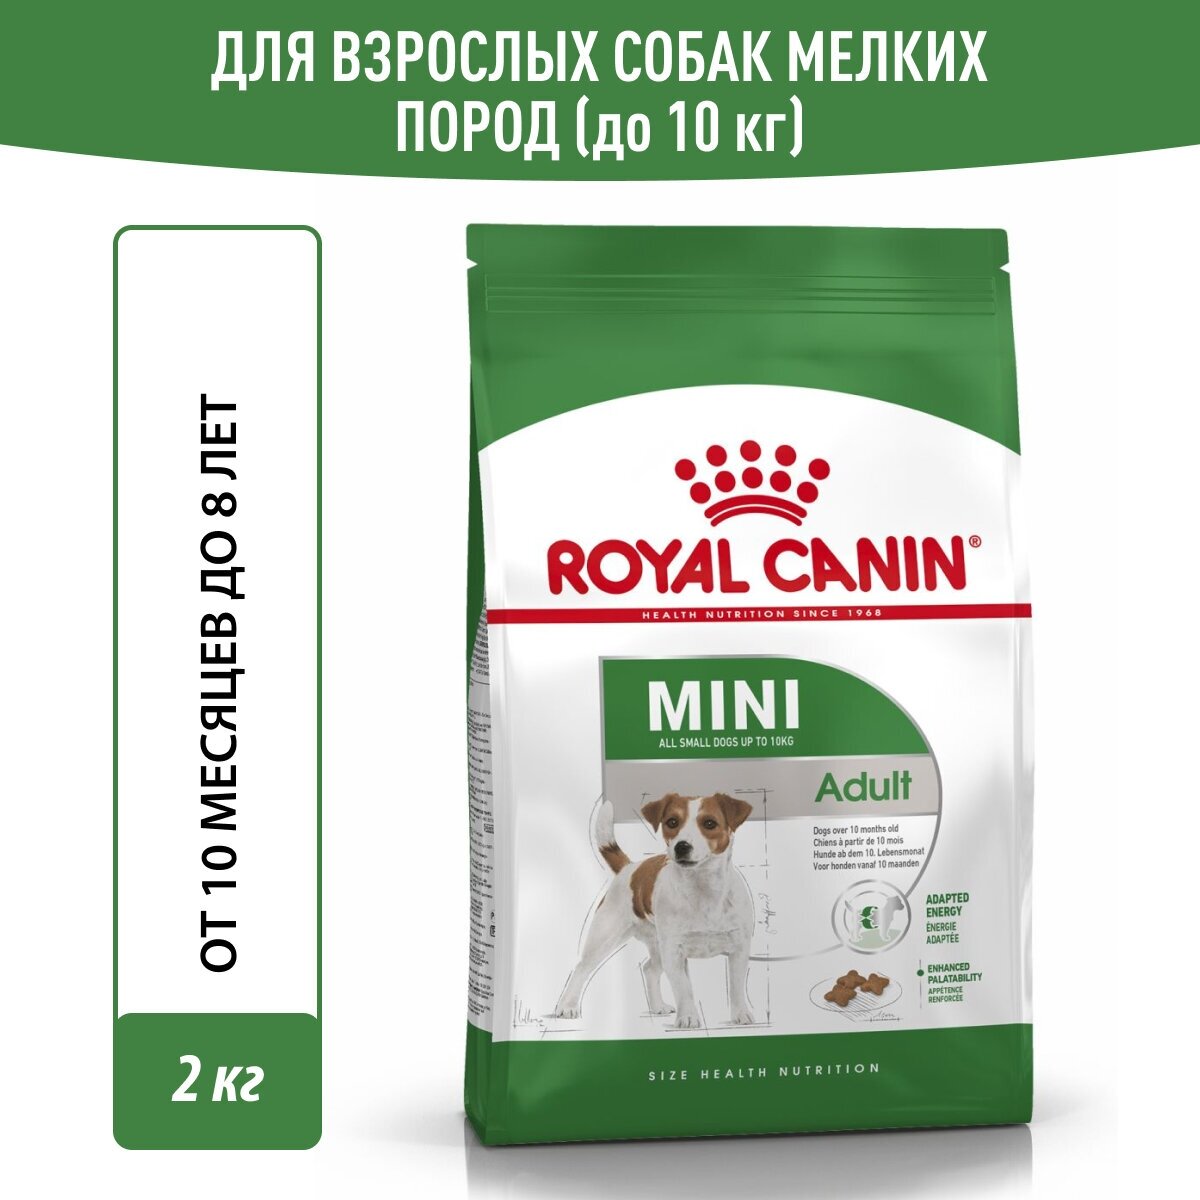   Royal Canin Mini Adult      10   8  2  (  )